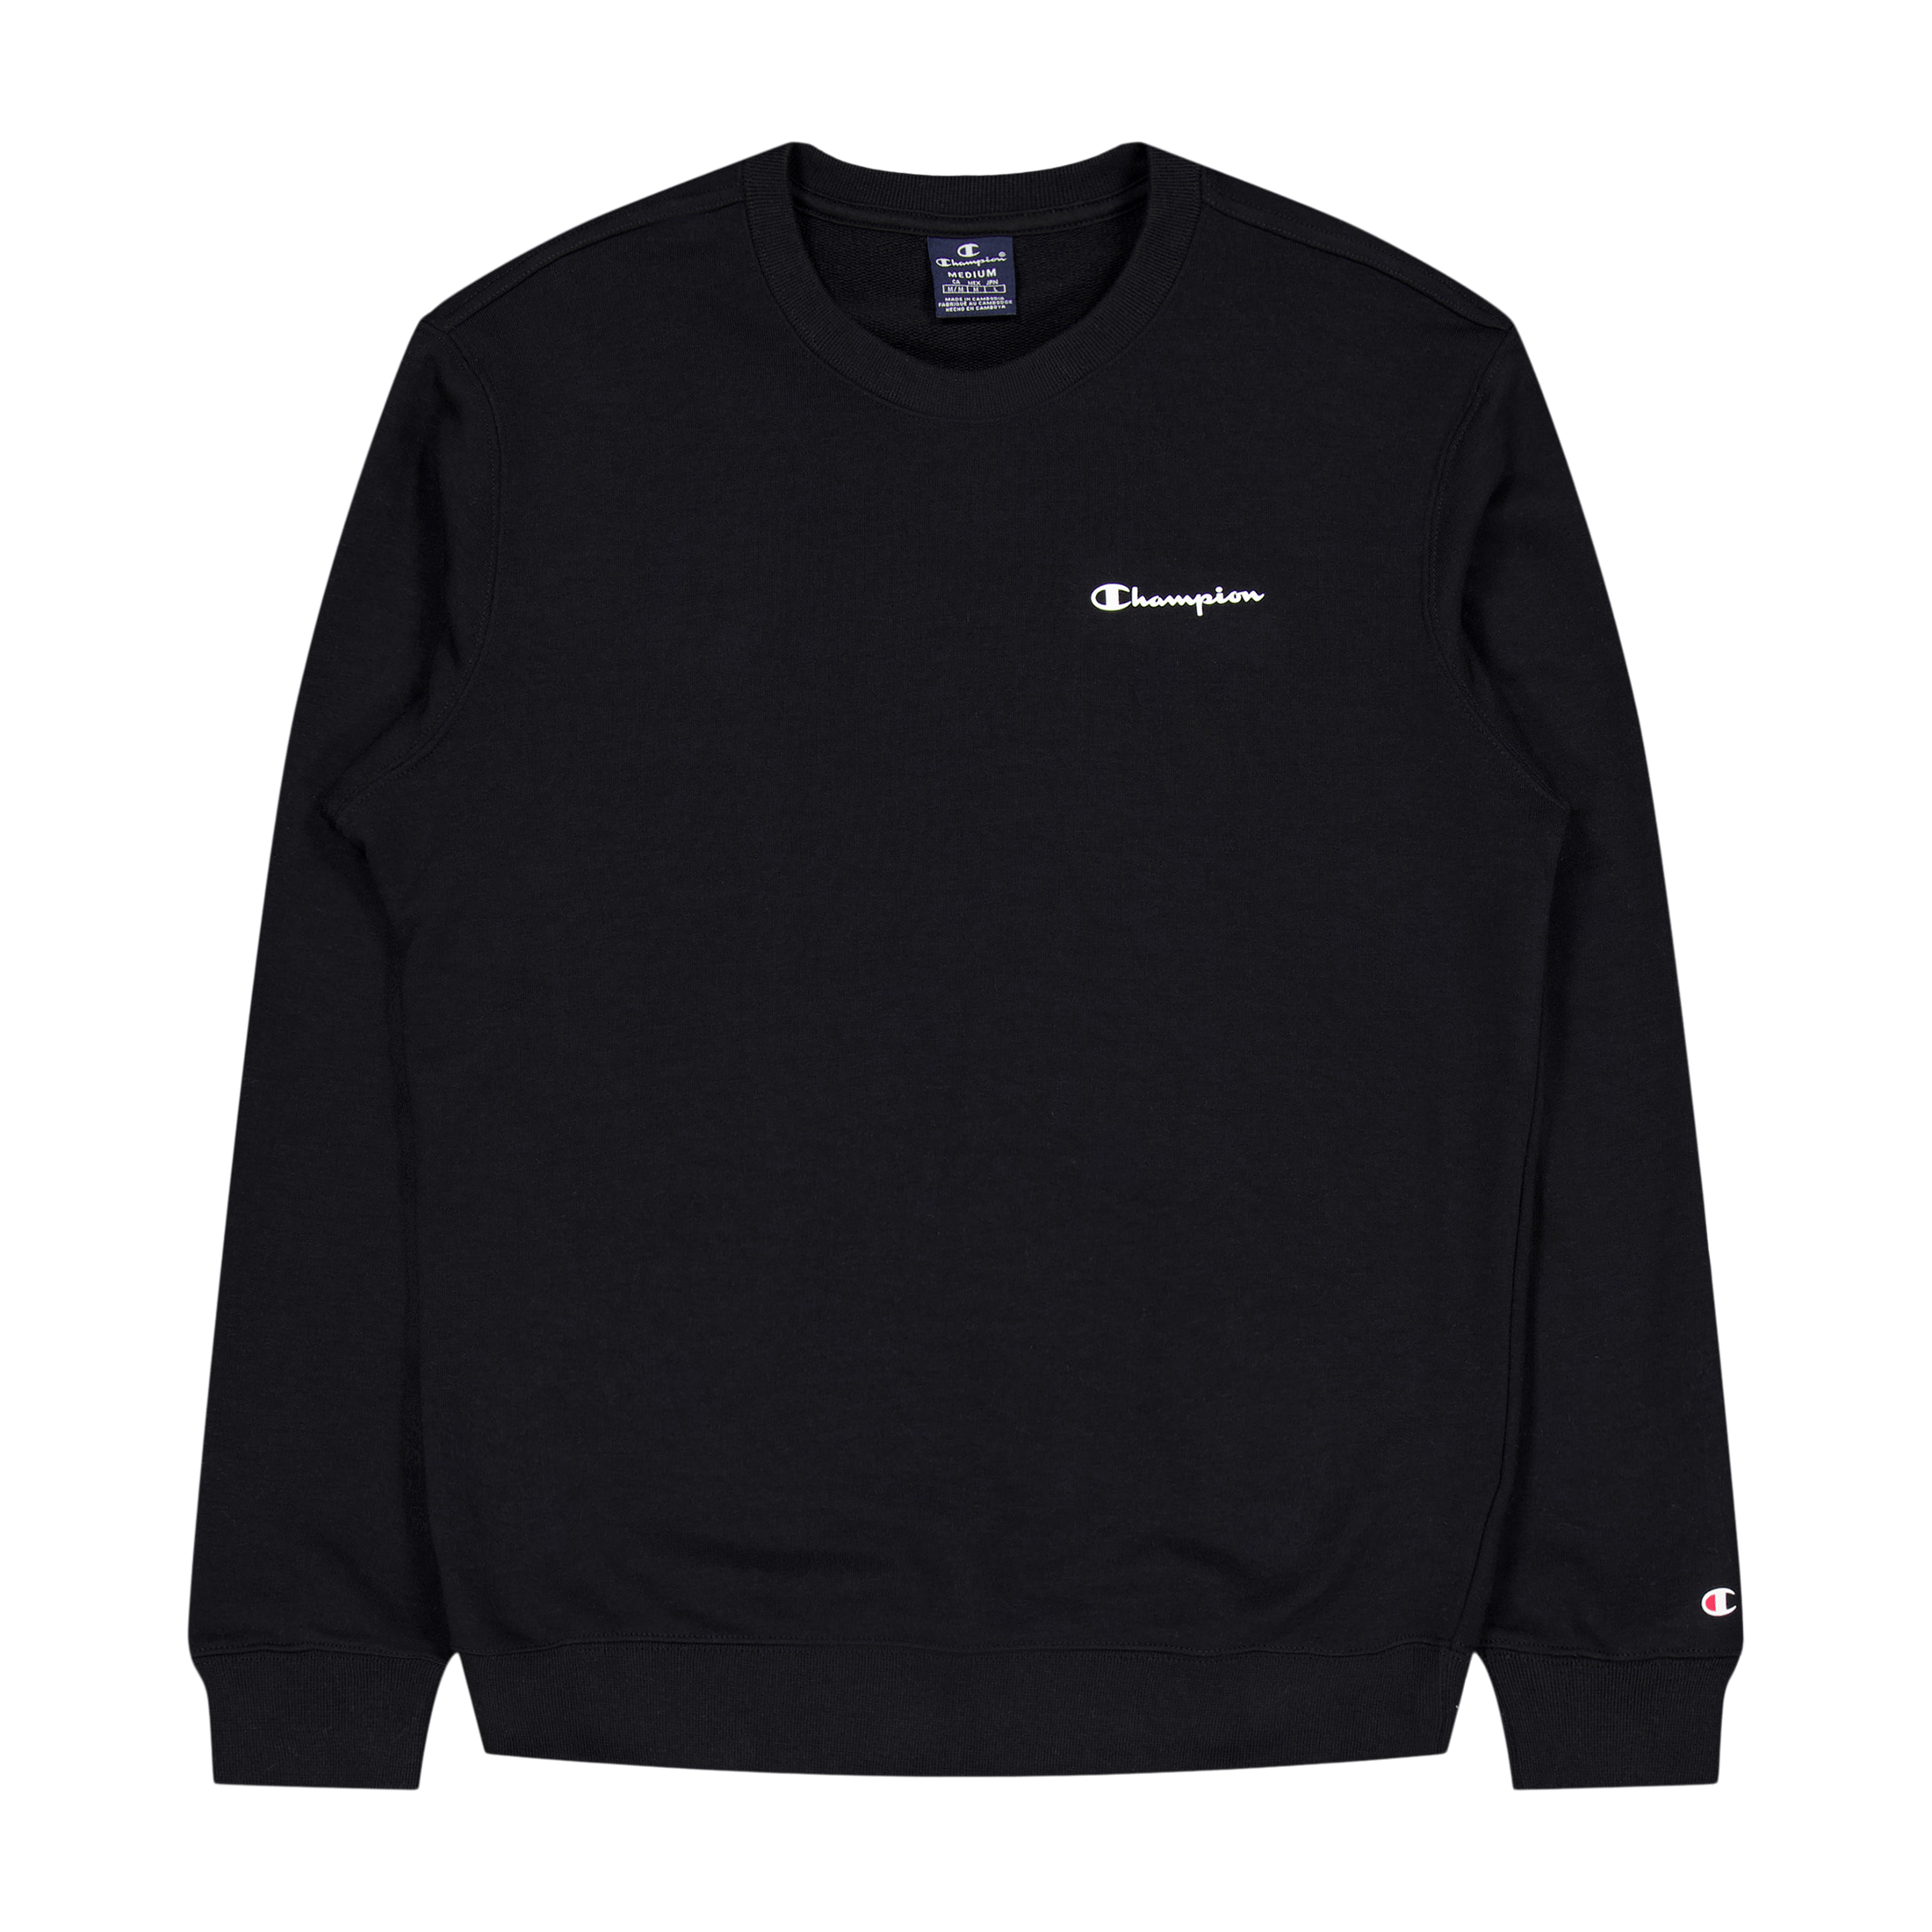 Champion Sweatshirt | Caliroots.com